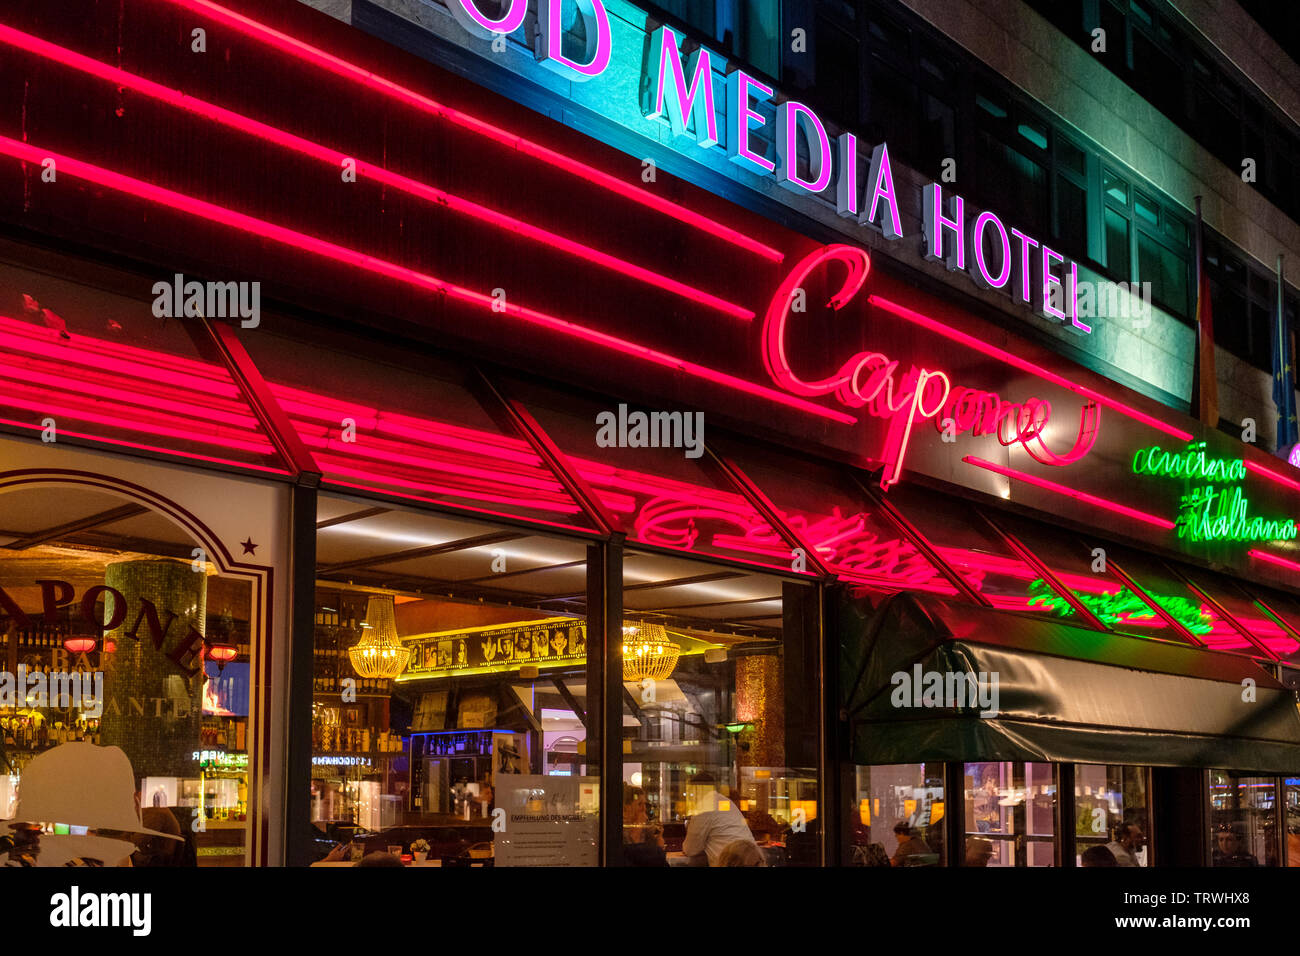 Hollywood Media Hotel Berlin and Capone Restaurant at night on Kurfürstendamm , Berlin,Germany Stock Photo